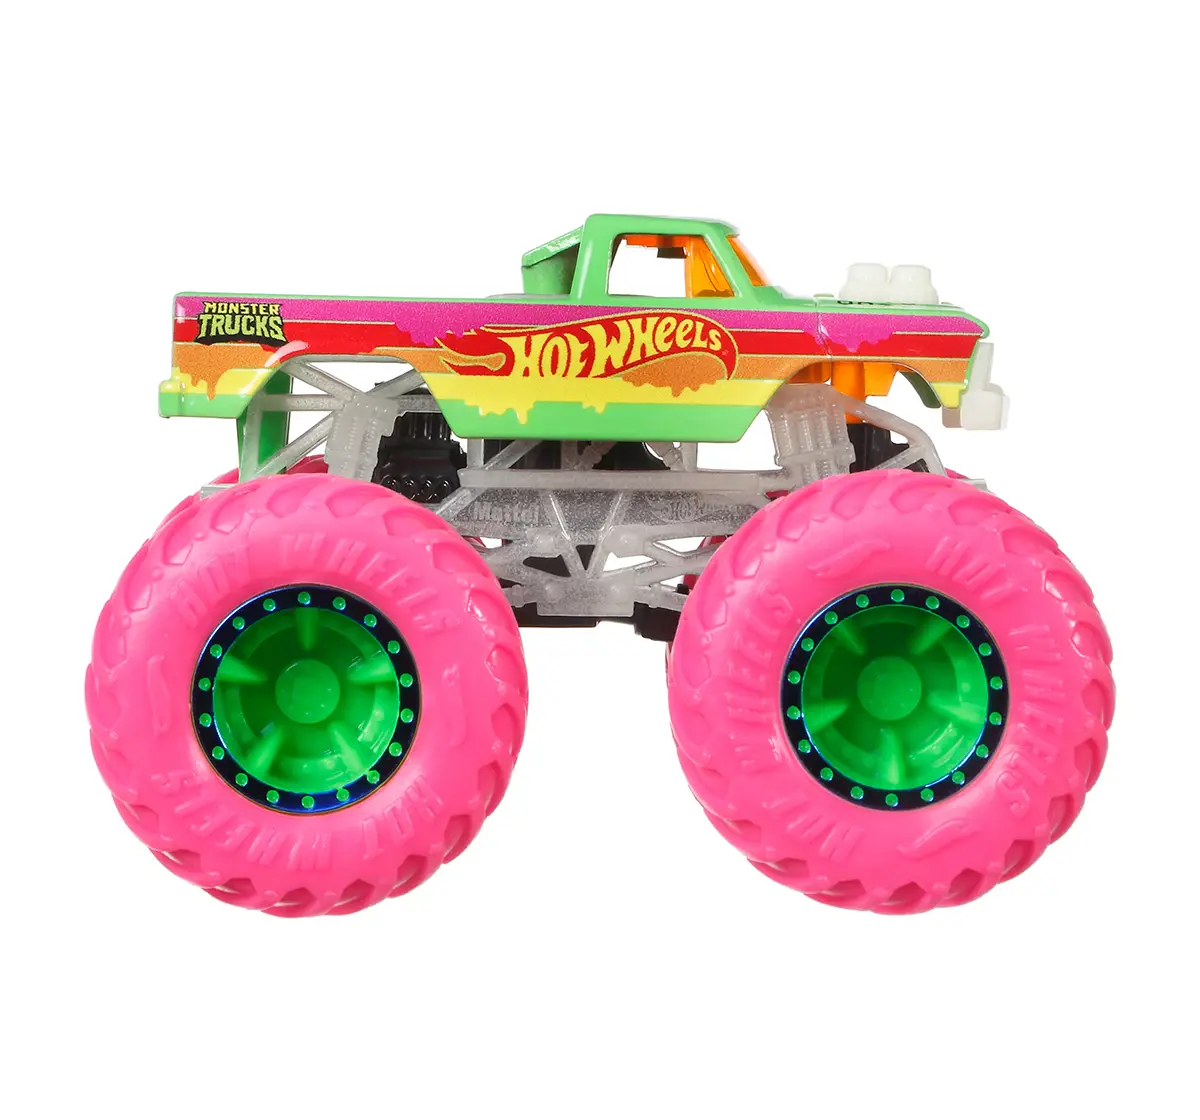 Hot Wheels Monster Truck Glow In The Dark Truck Assorted,Boys,3Y+,Multicolour